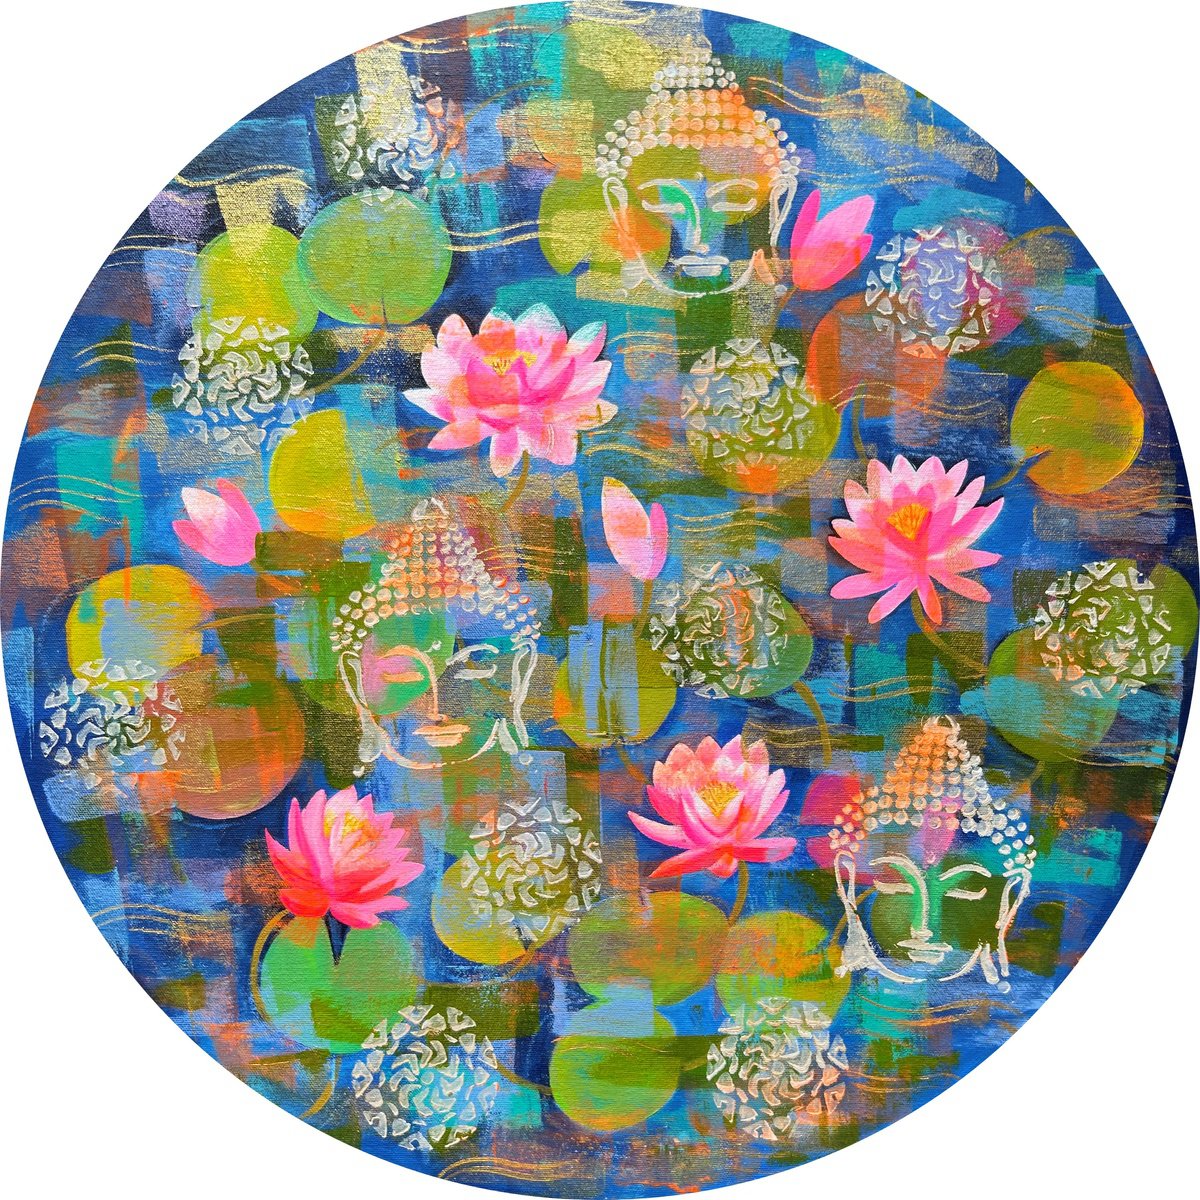 Regal-II! Water Lilies with Buddha Art by Amita Dand